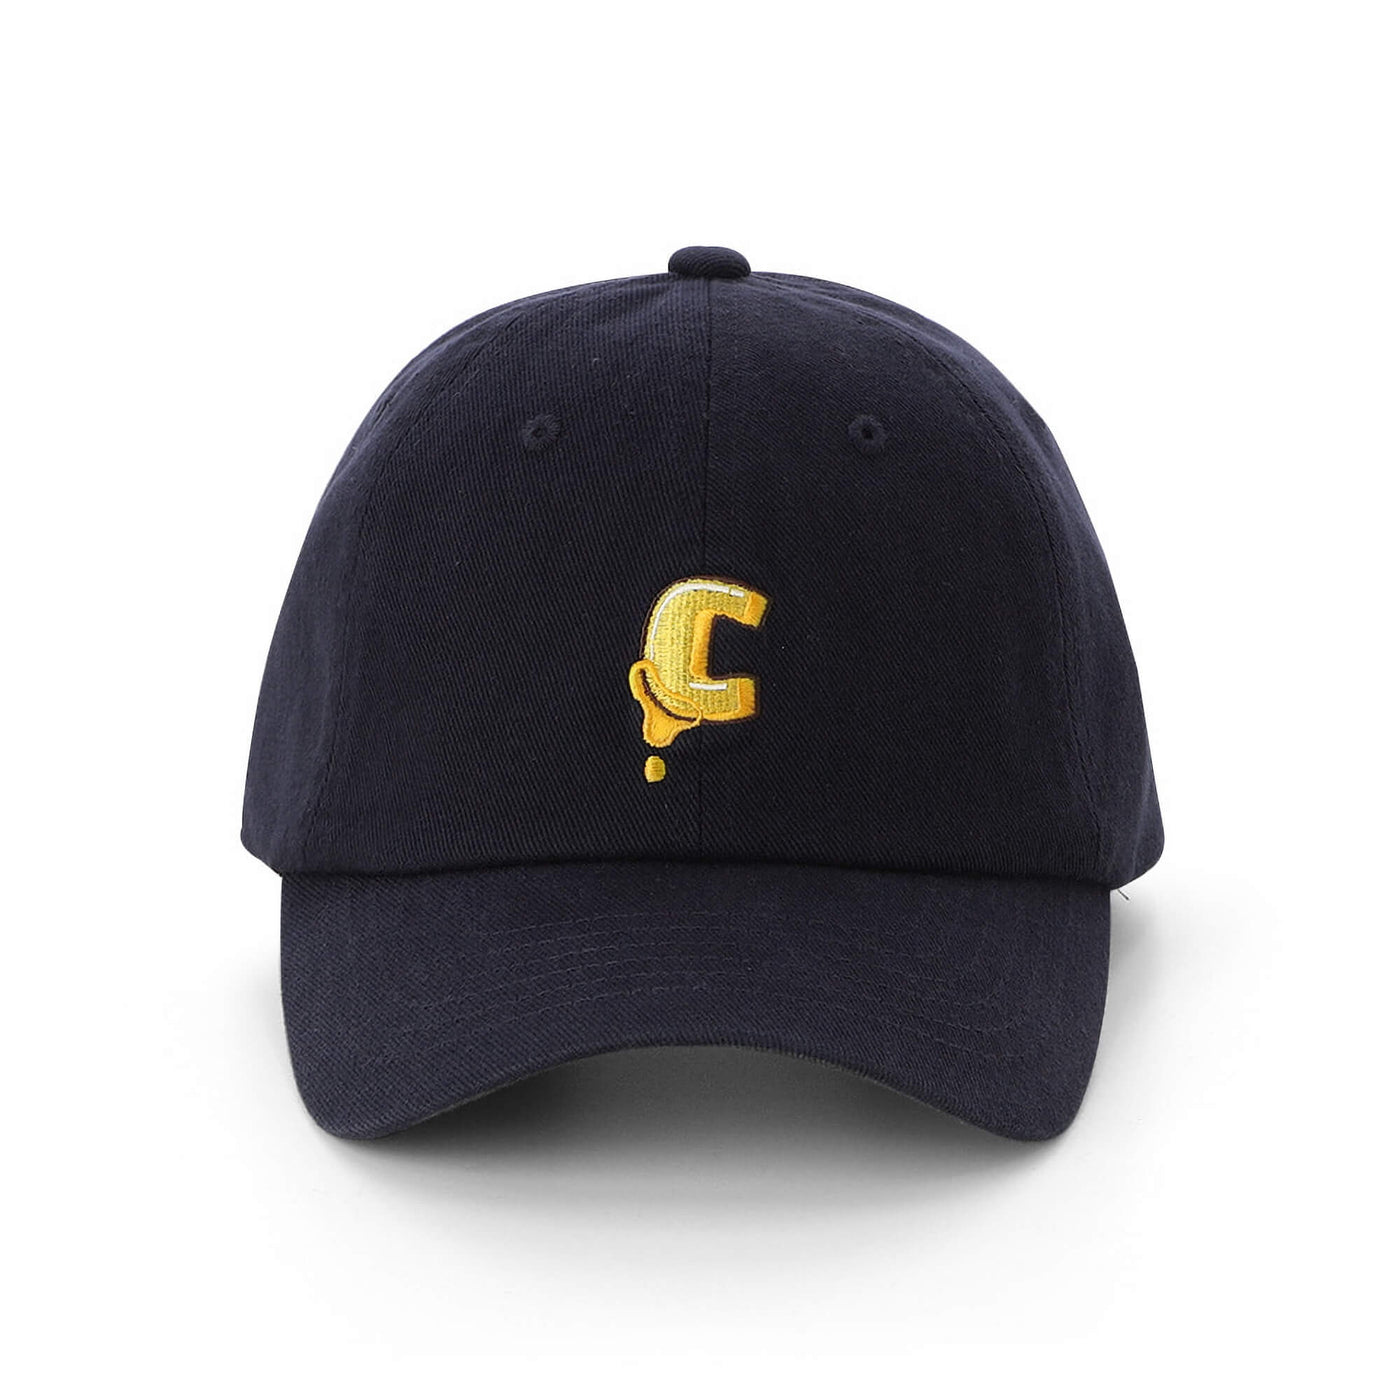 men_women_adorable_cotton_hat_baseball_cap_navy